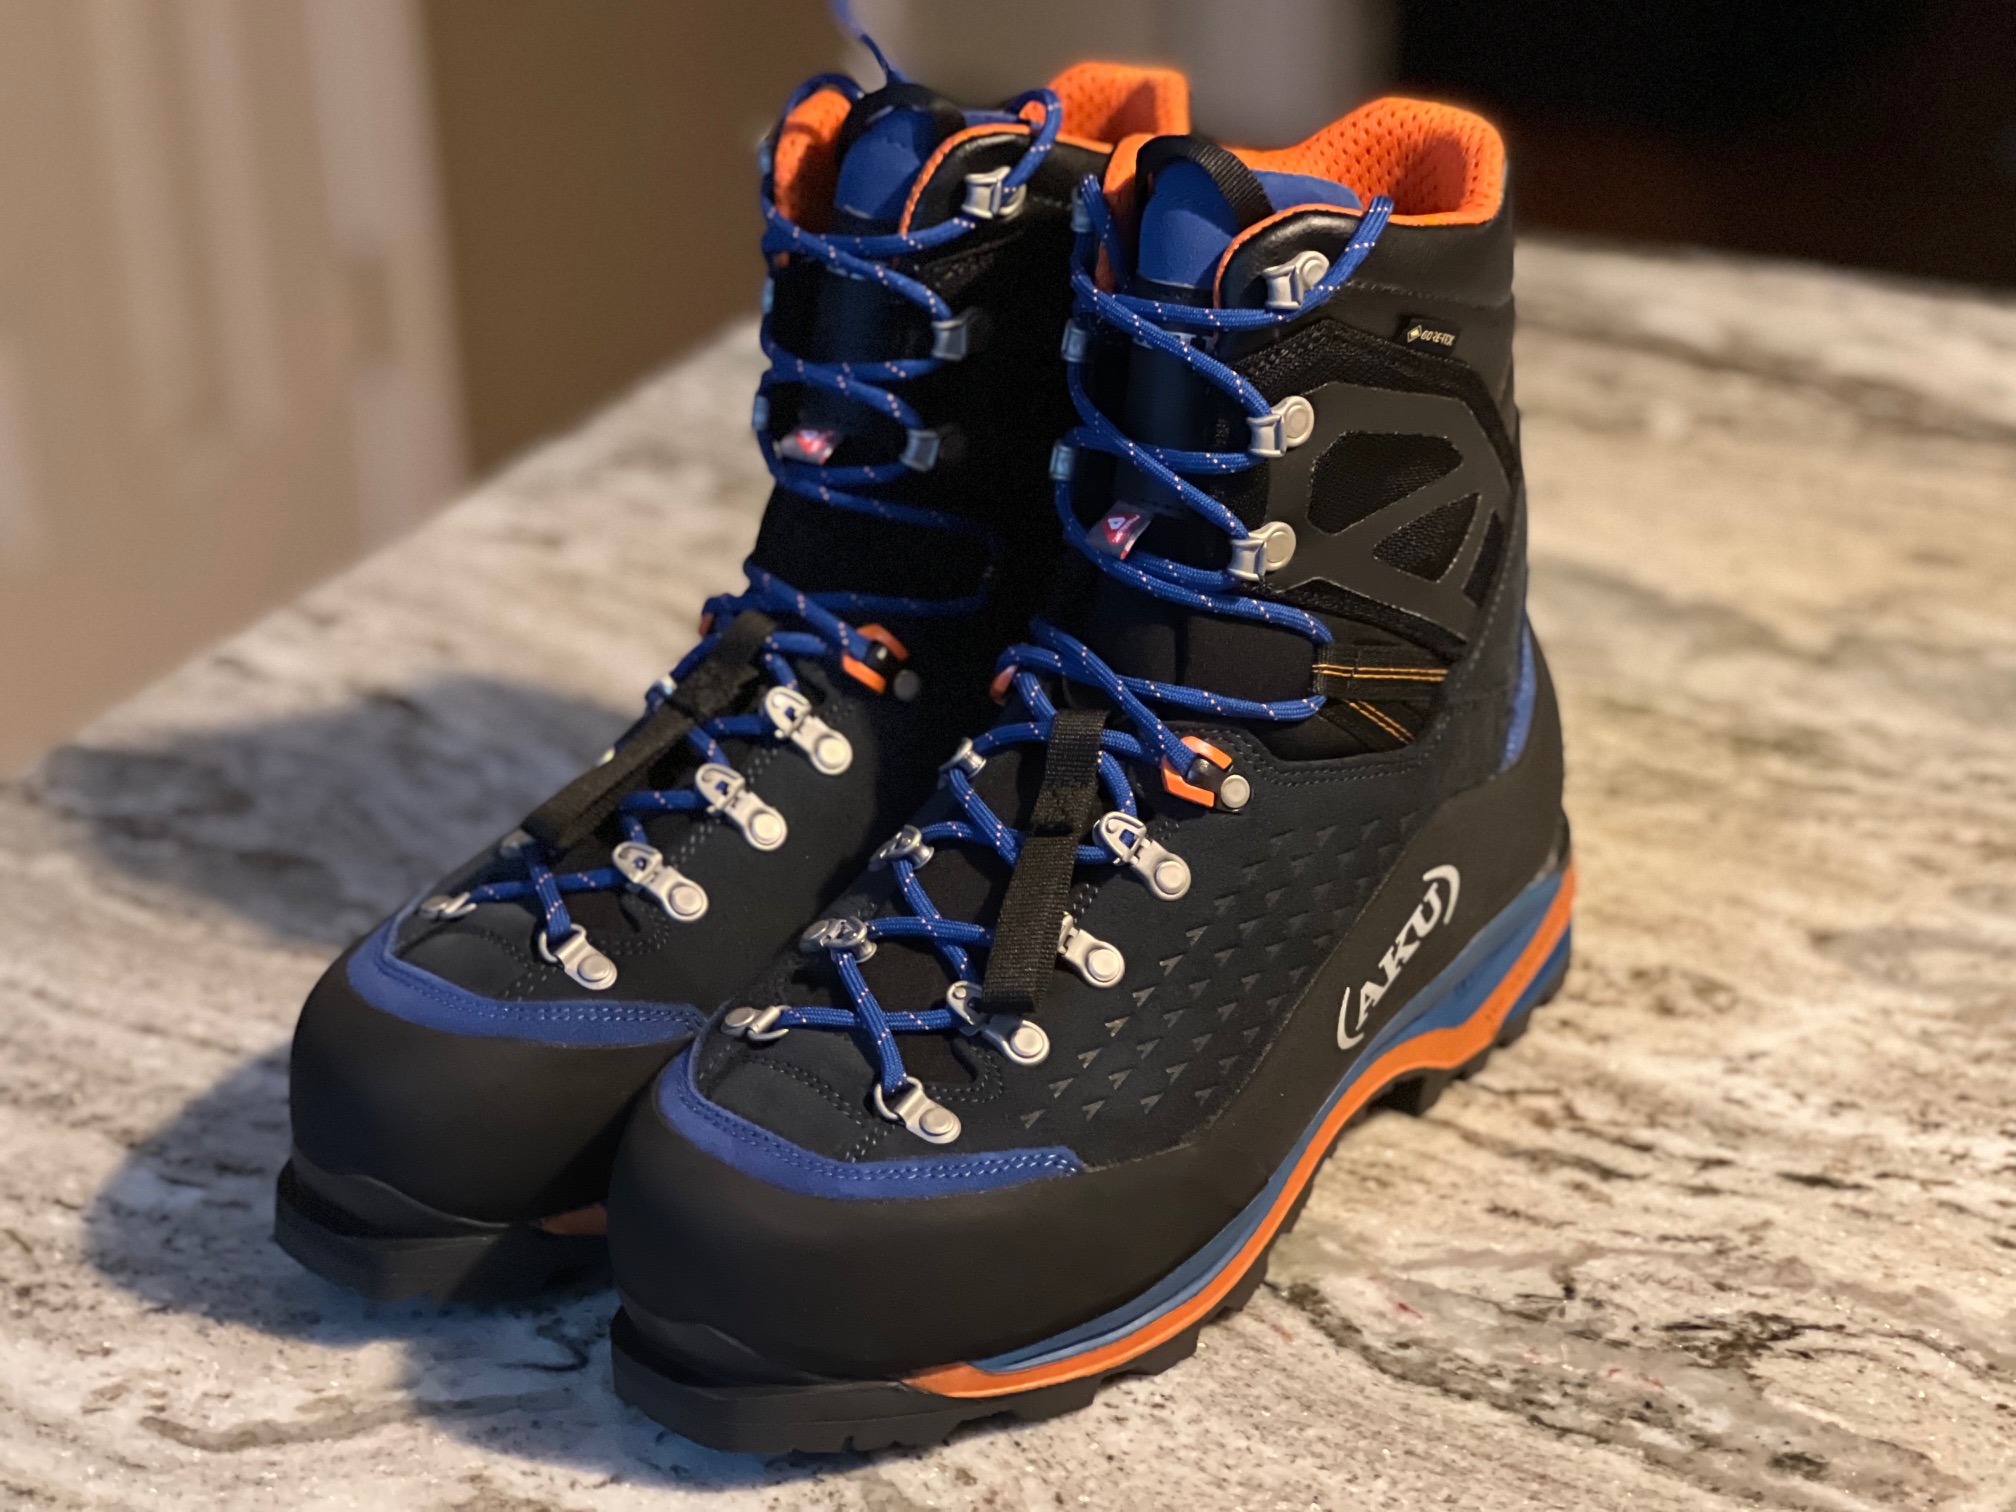 AKU Hayatsuki Mountaineering Boots Review